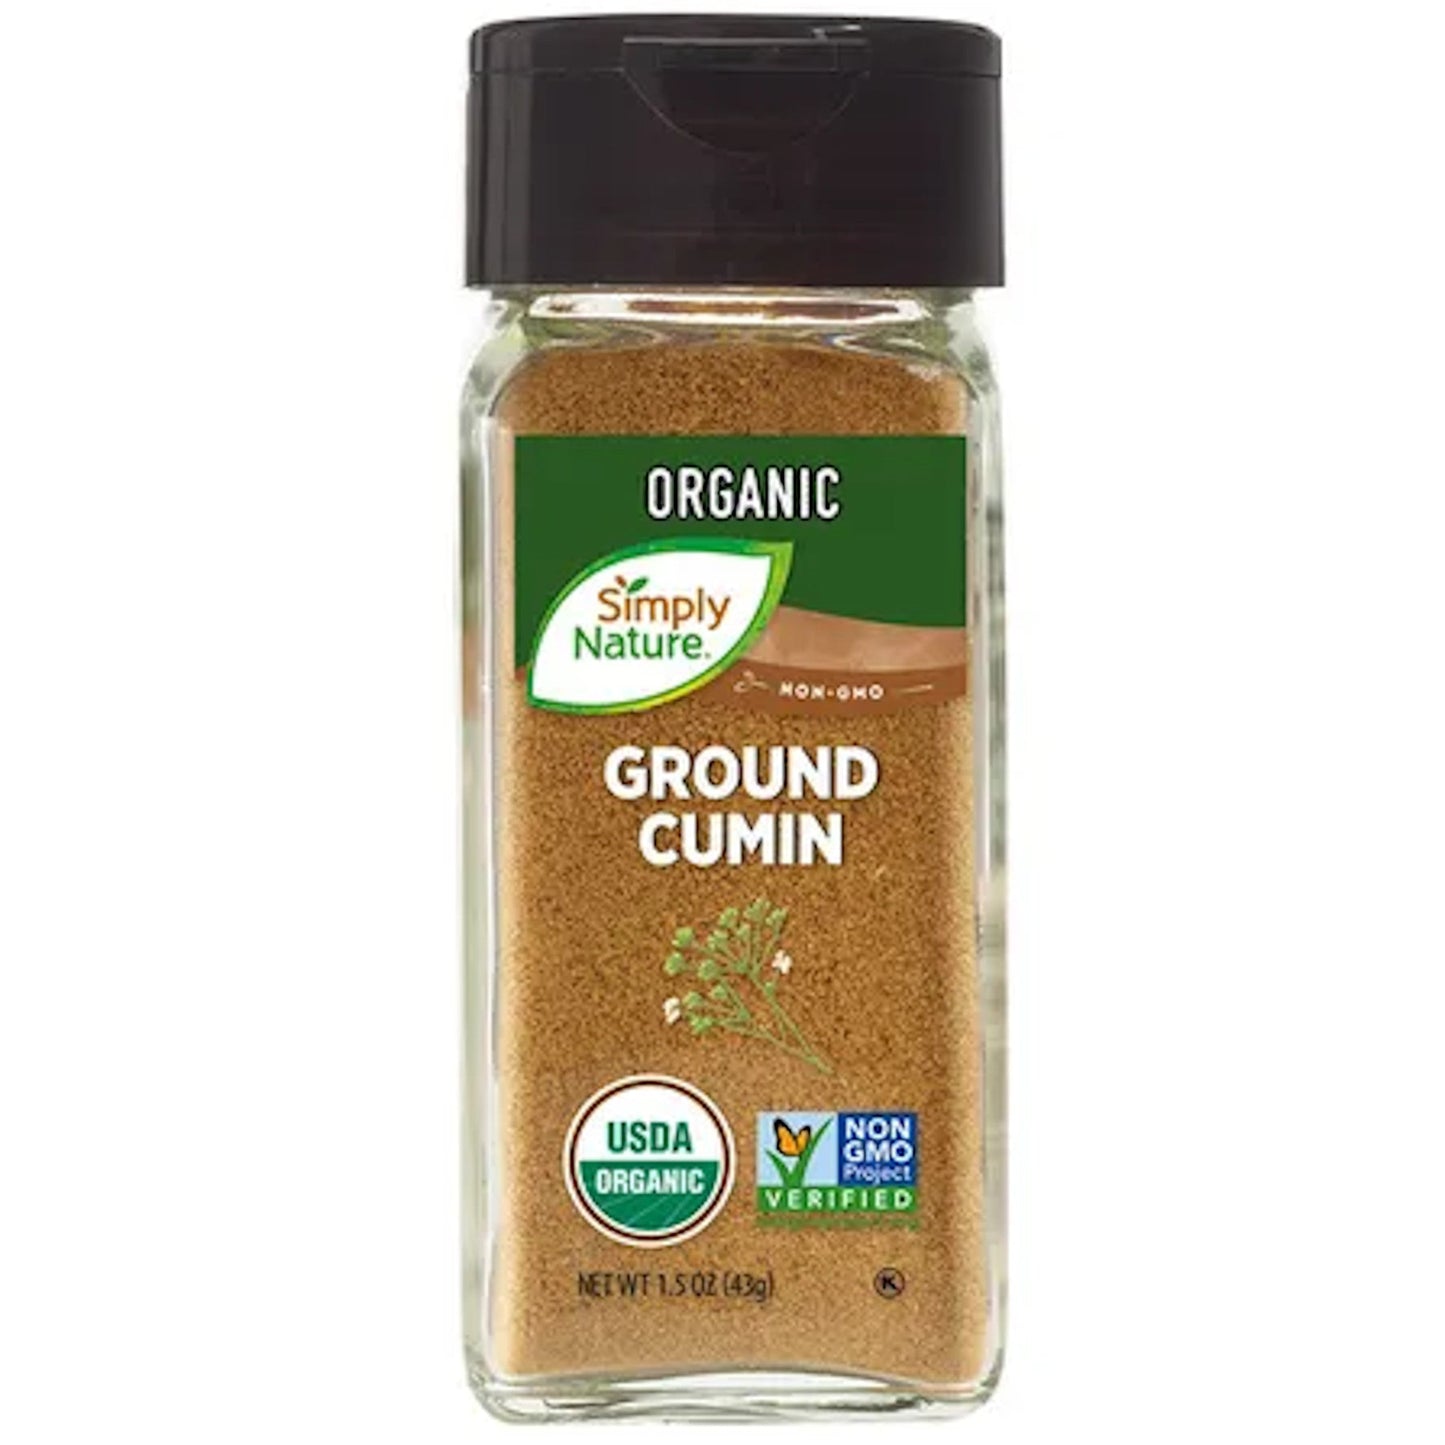 Simply Nature Organic Ground Cumin 1.5 oz - FlavorKicker.com